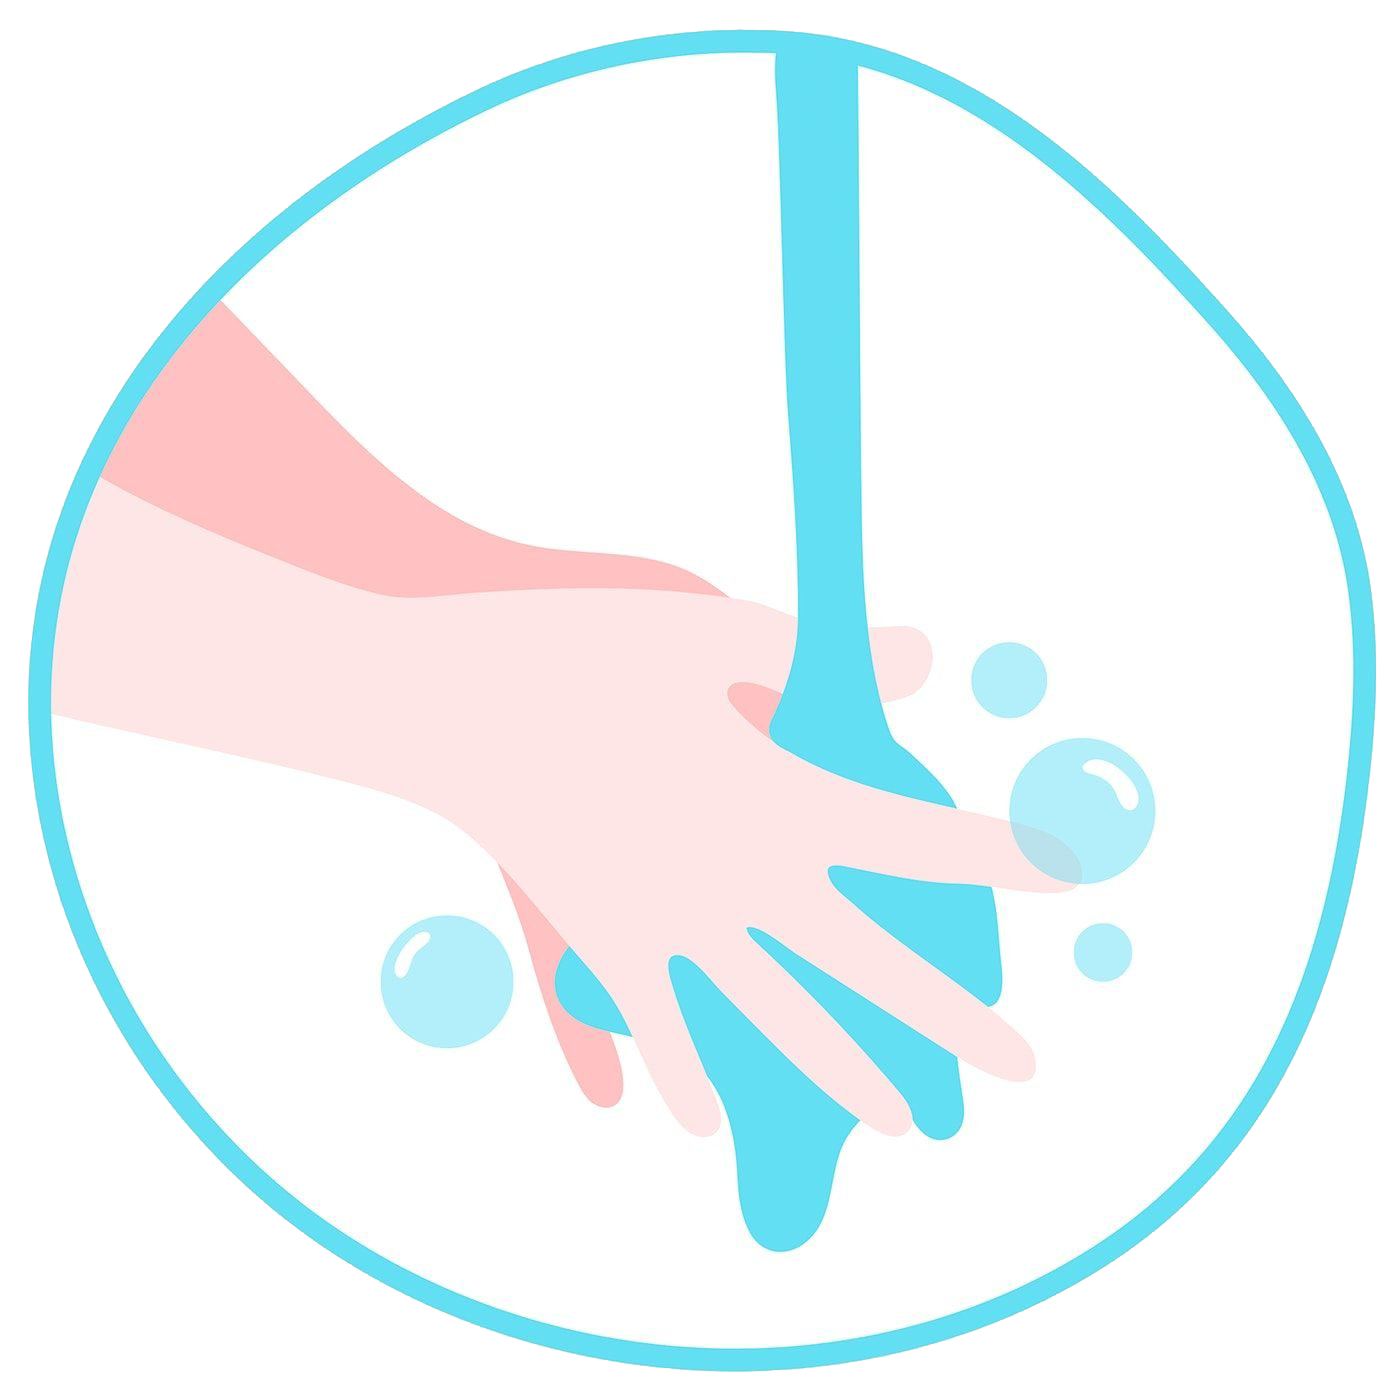 Washing Hands PNG Transparent Image